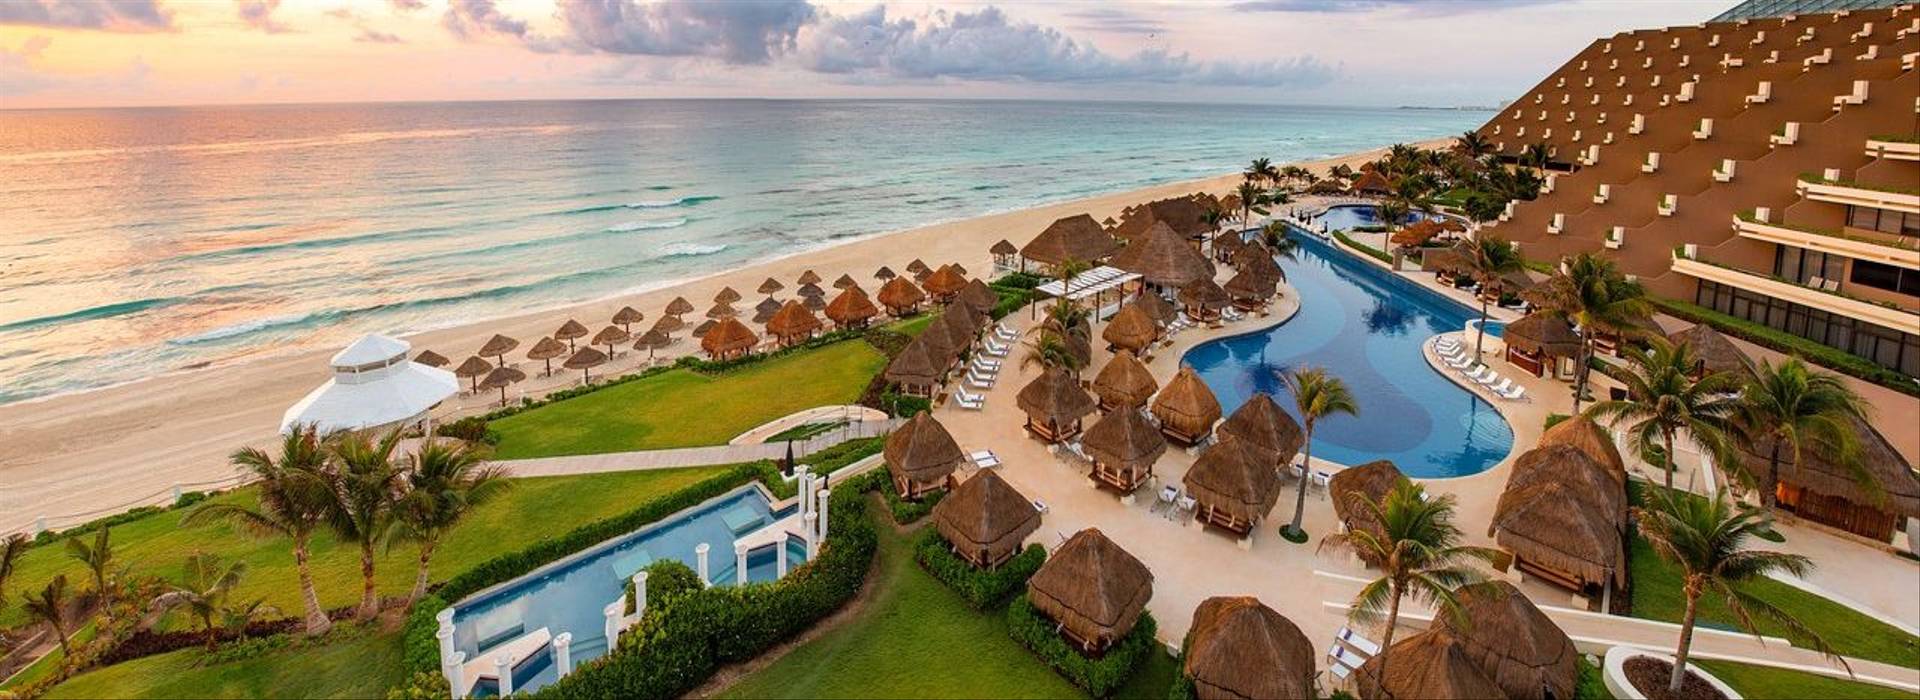 Meliá-Hotels-Paradisus-Cancun-Royal-Service-Area.jpg